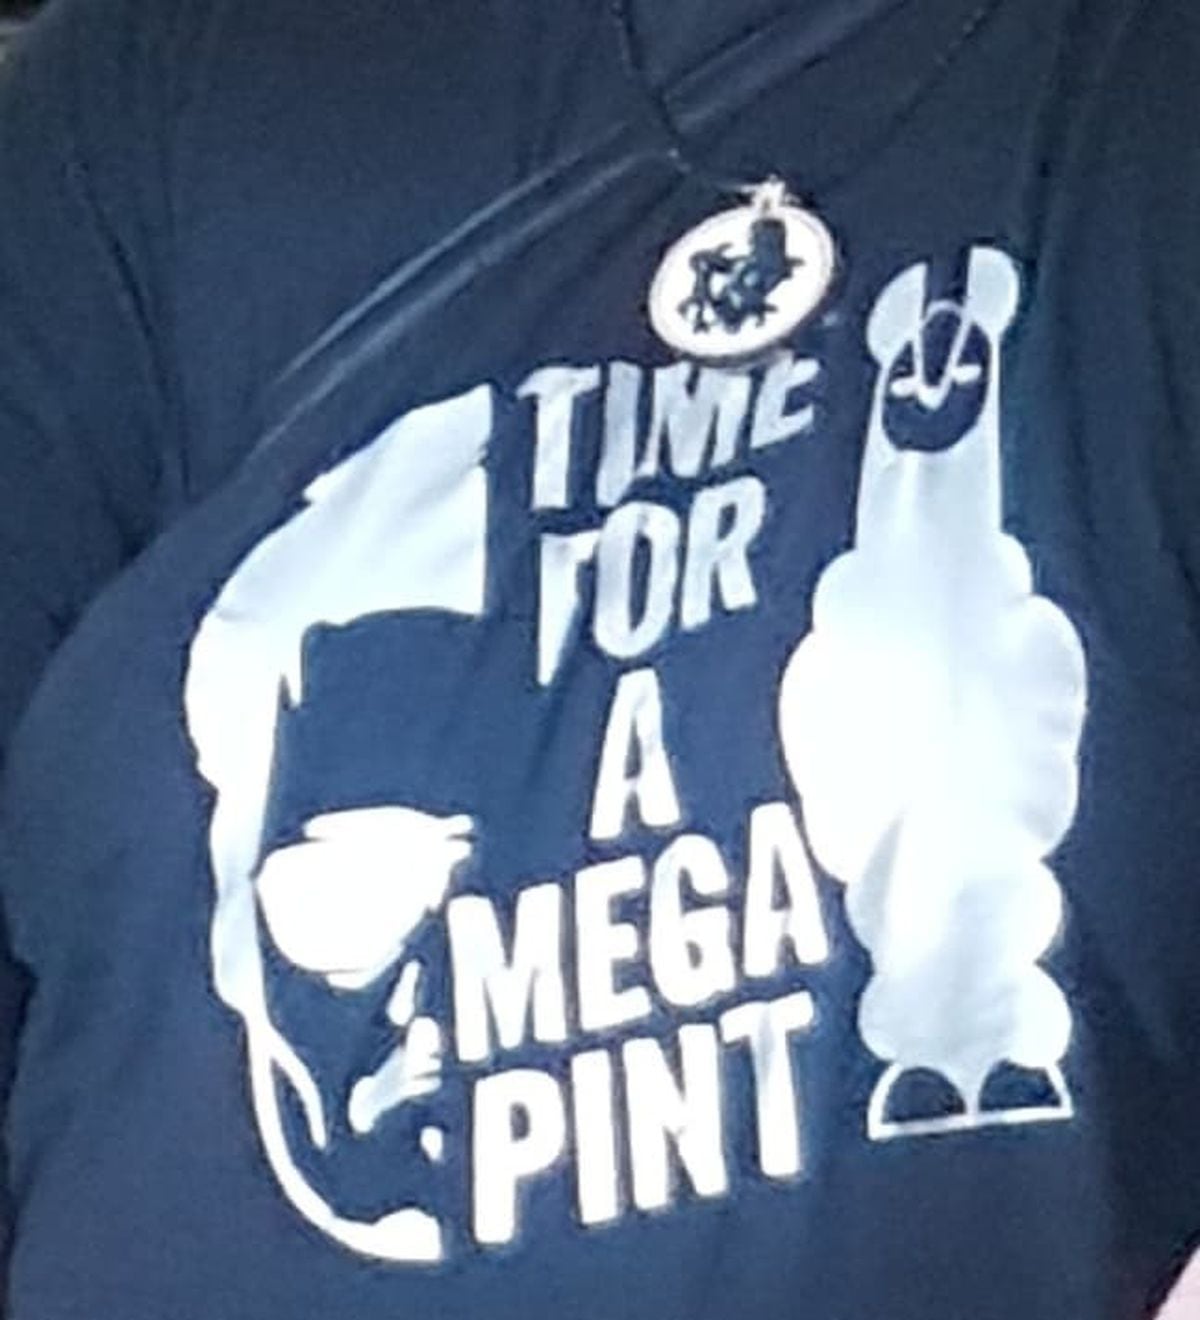 Mega Pint, a Depp fan's t-shirt